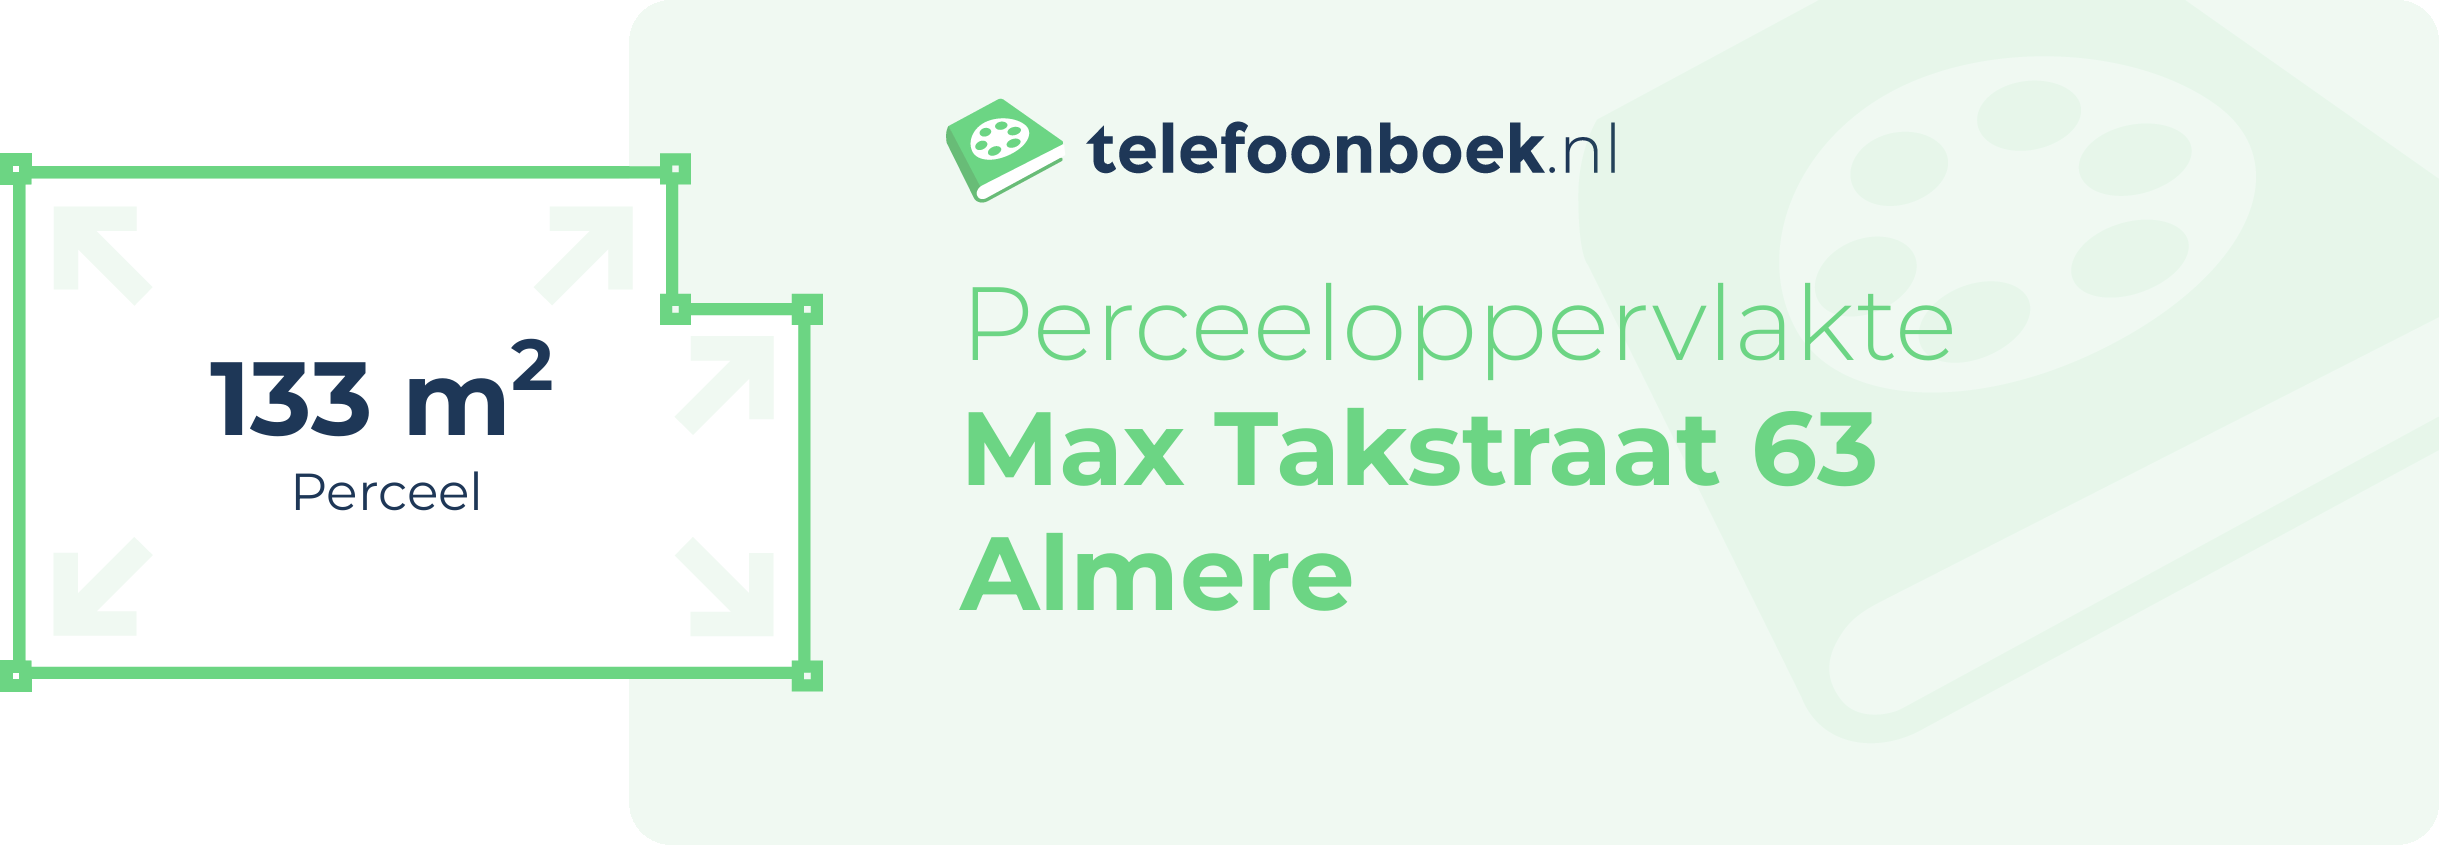 Perceeloppervlakte Max Takstraat 63 Almere